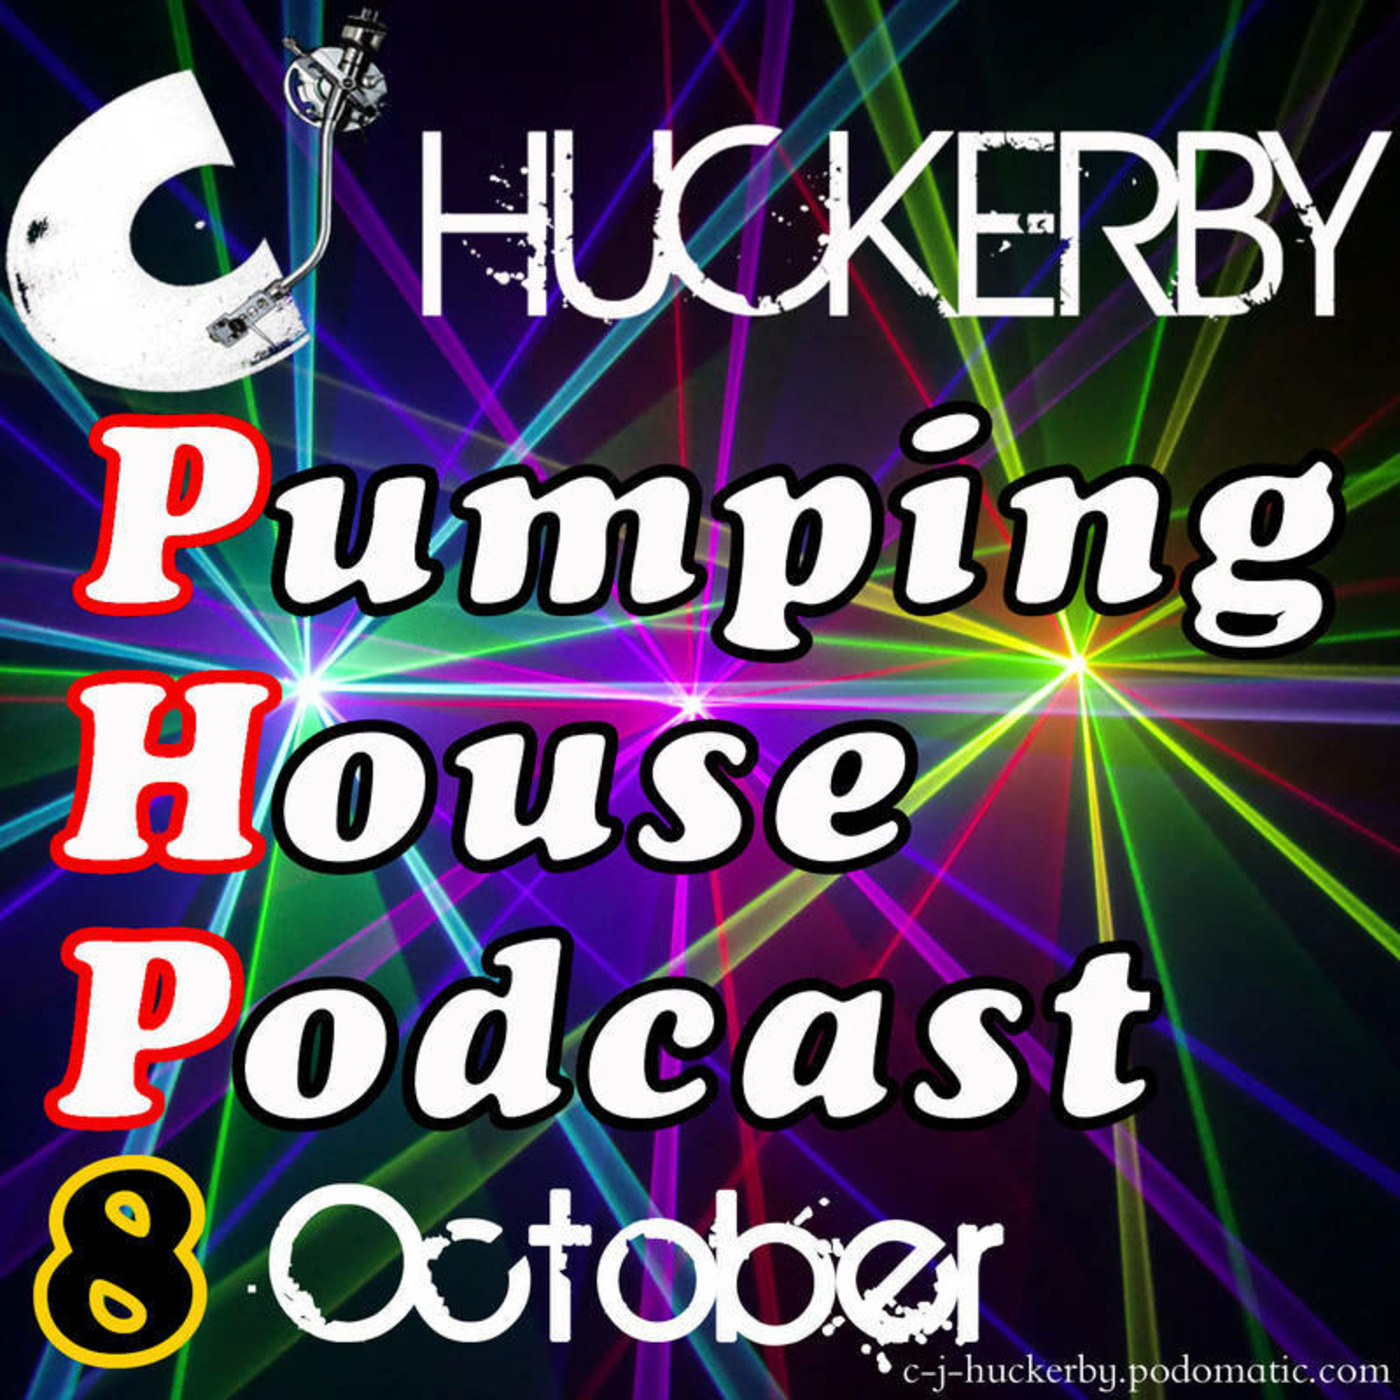 CJ Huckerby - PHP 8 - October '13 (RETRO HOUSE)